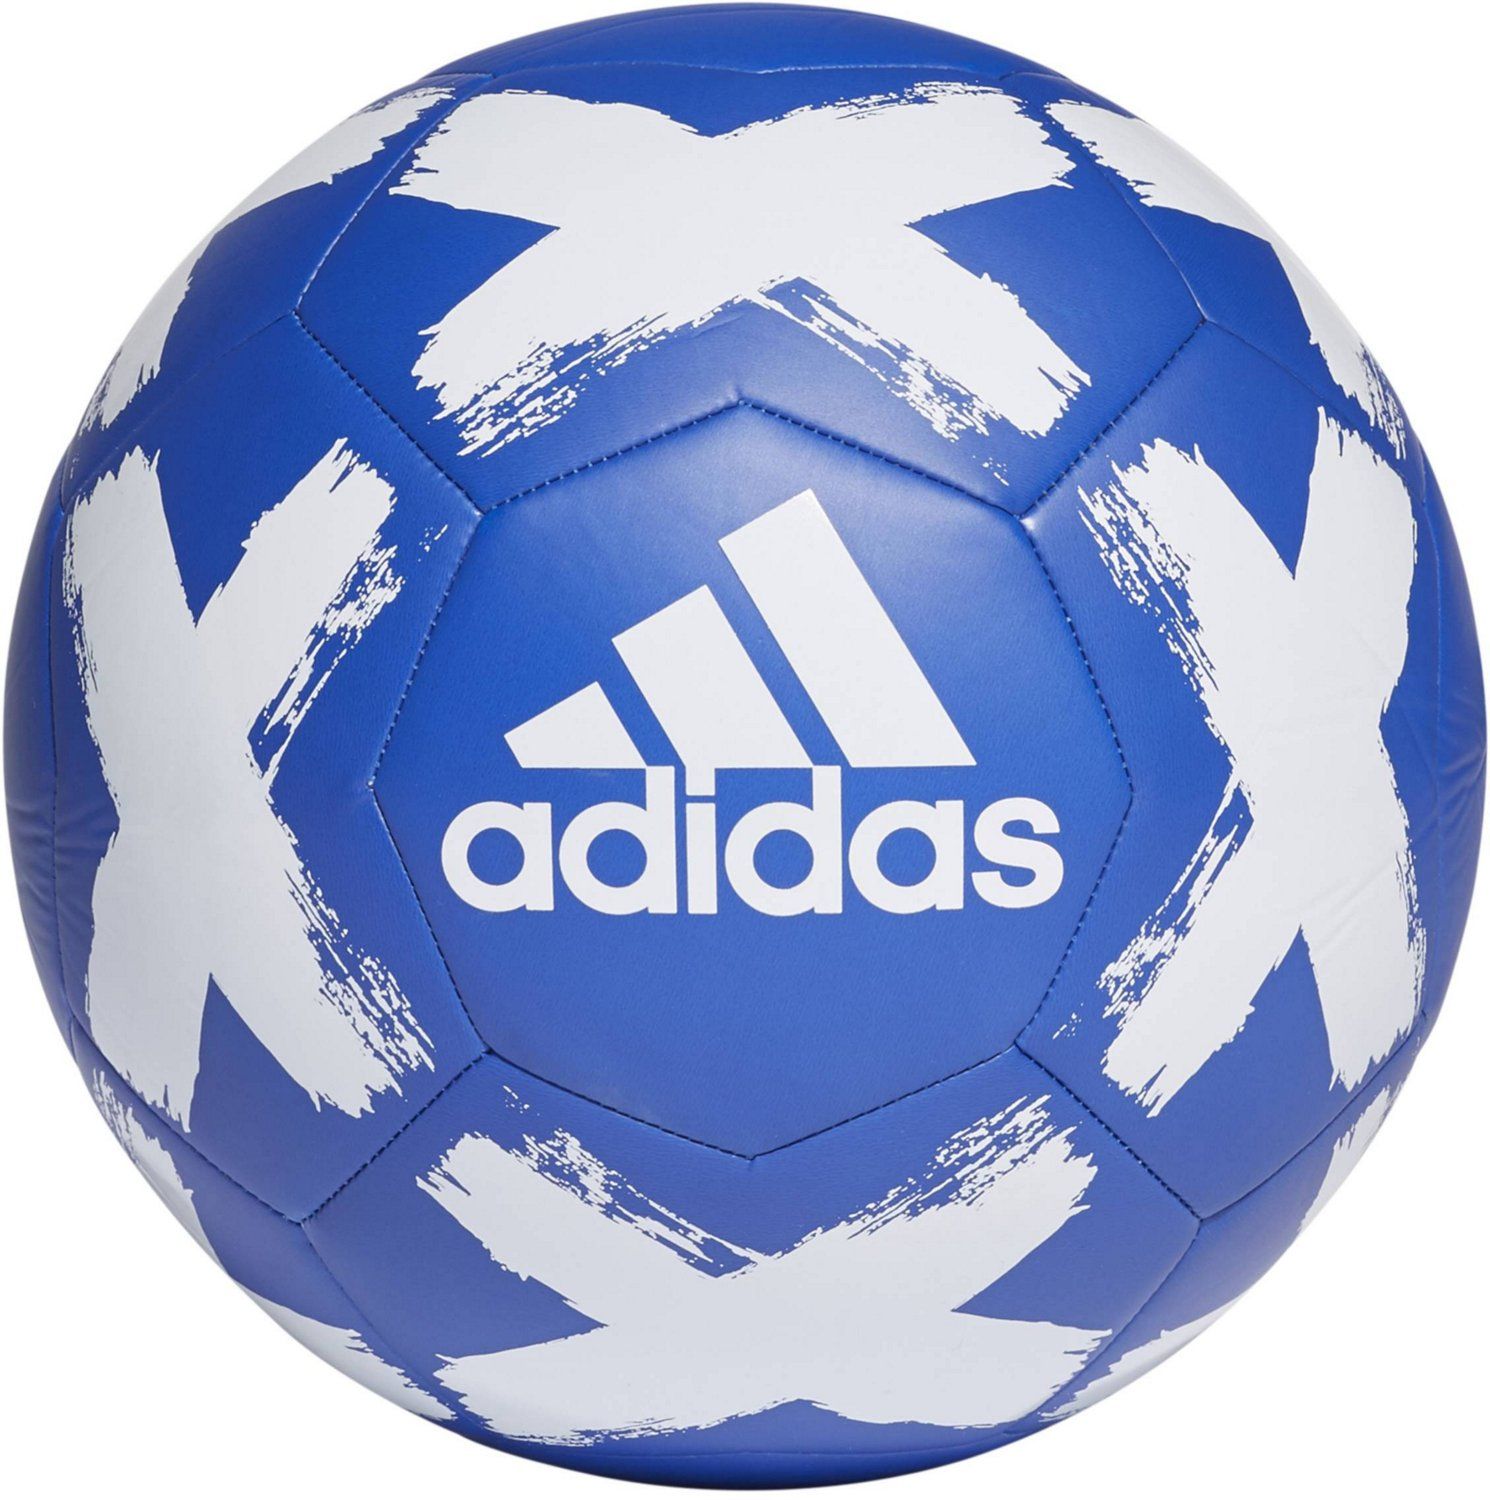 adidas Starlancer V Club Soccer Ball | Academy Sports + Outdoor Affiliate